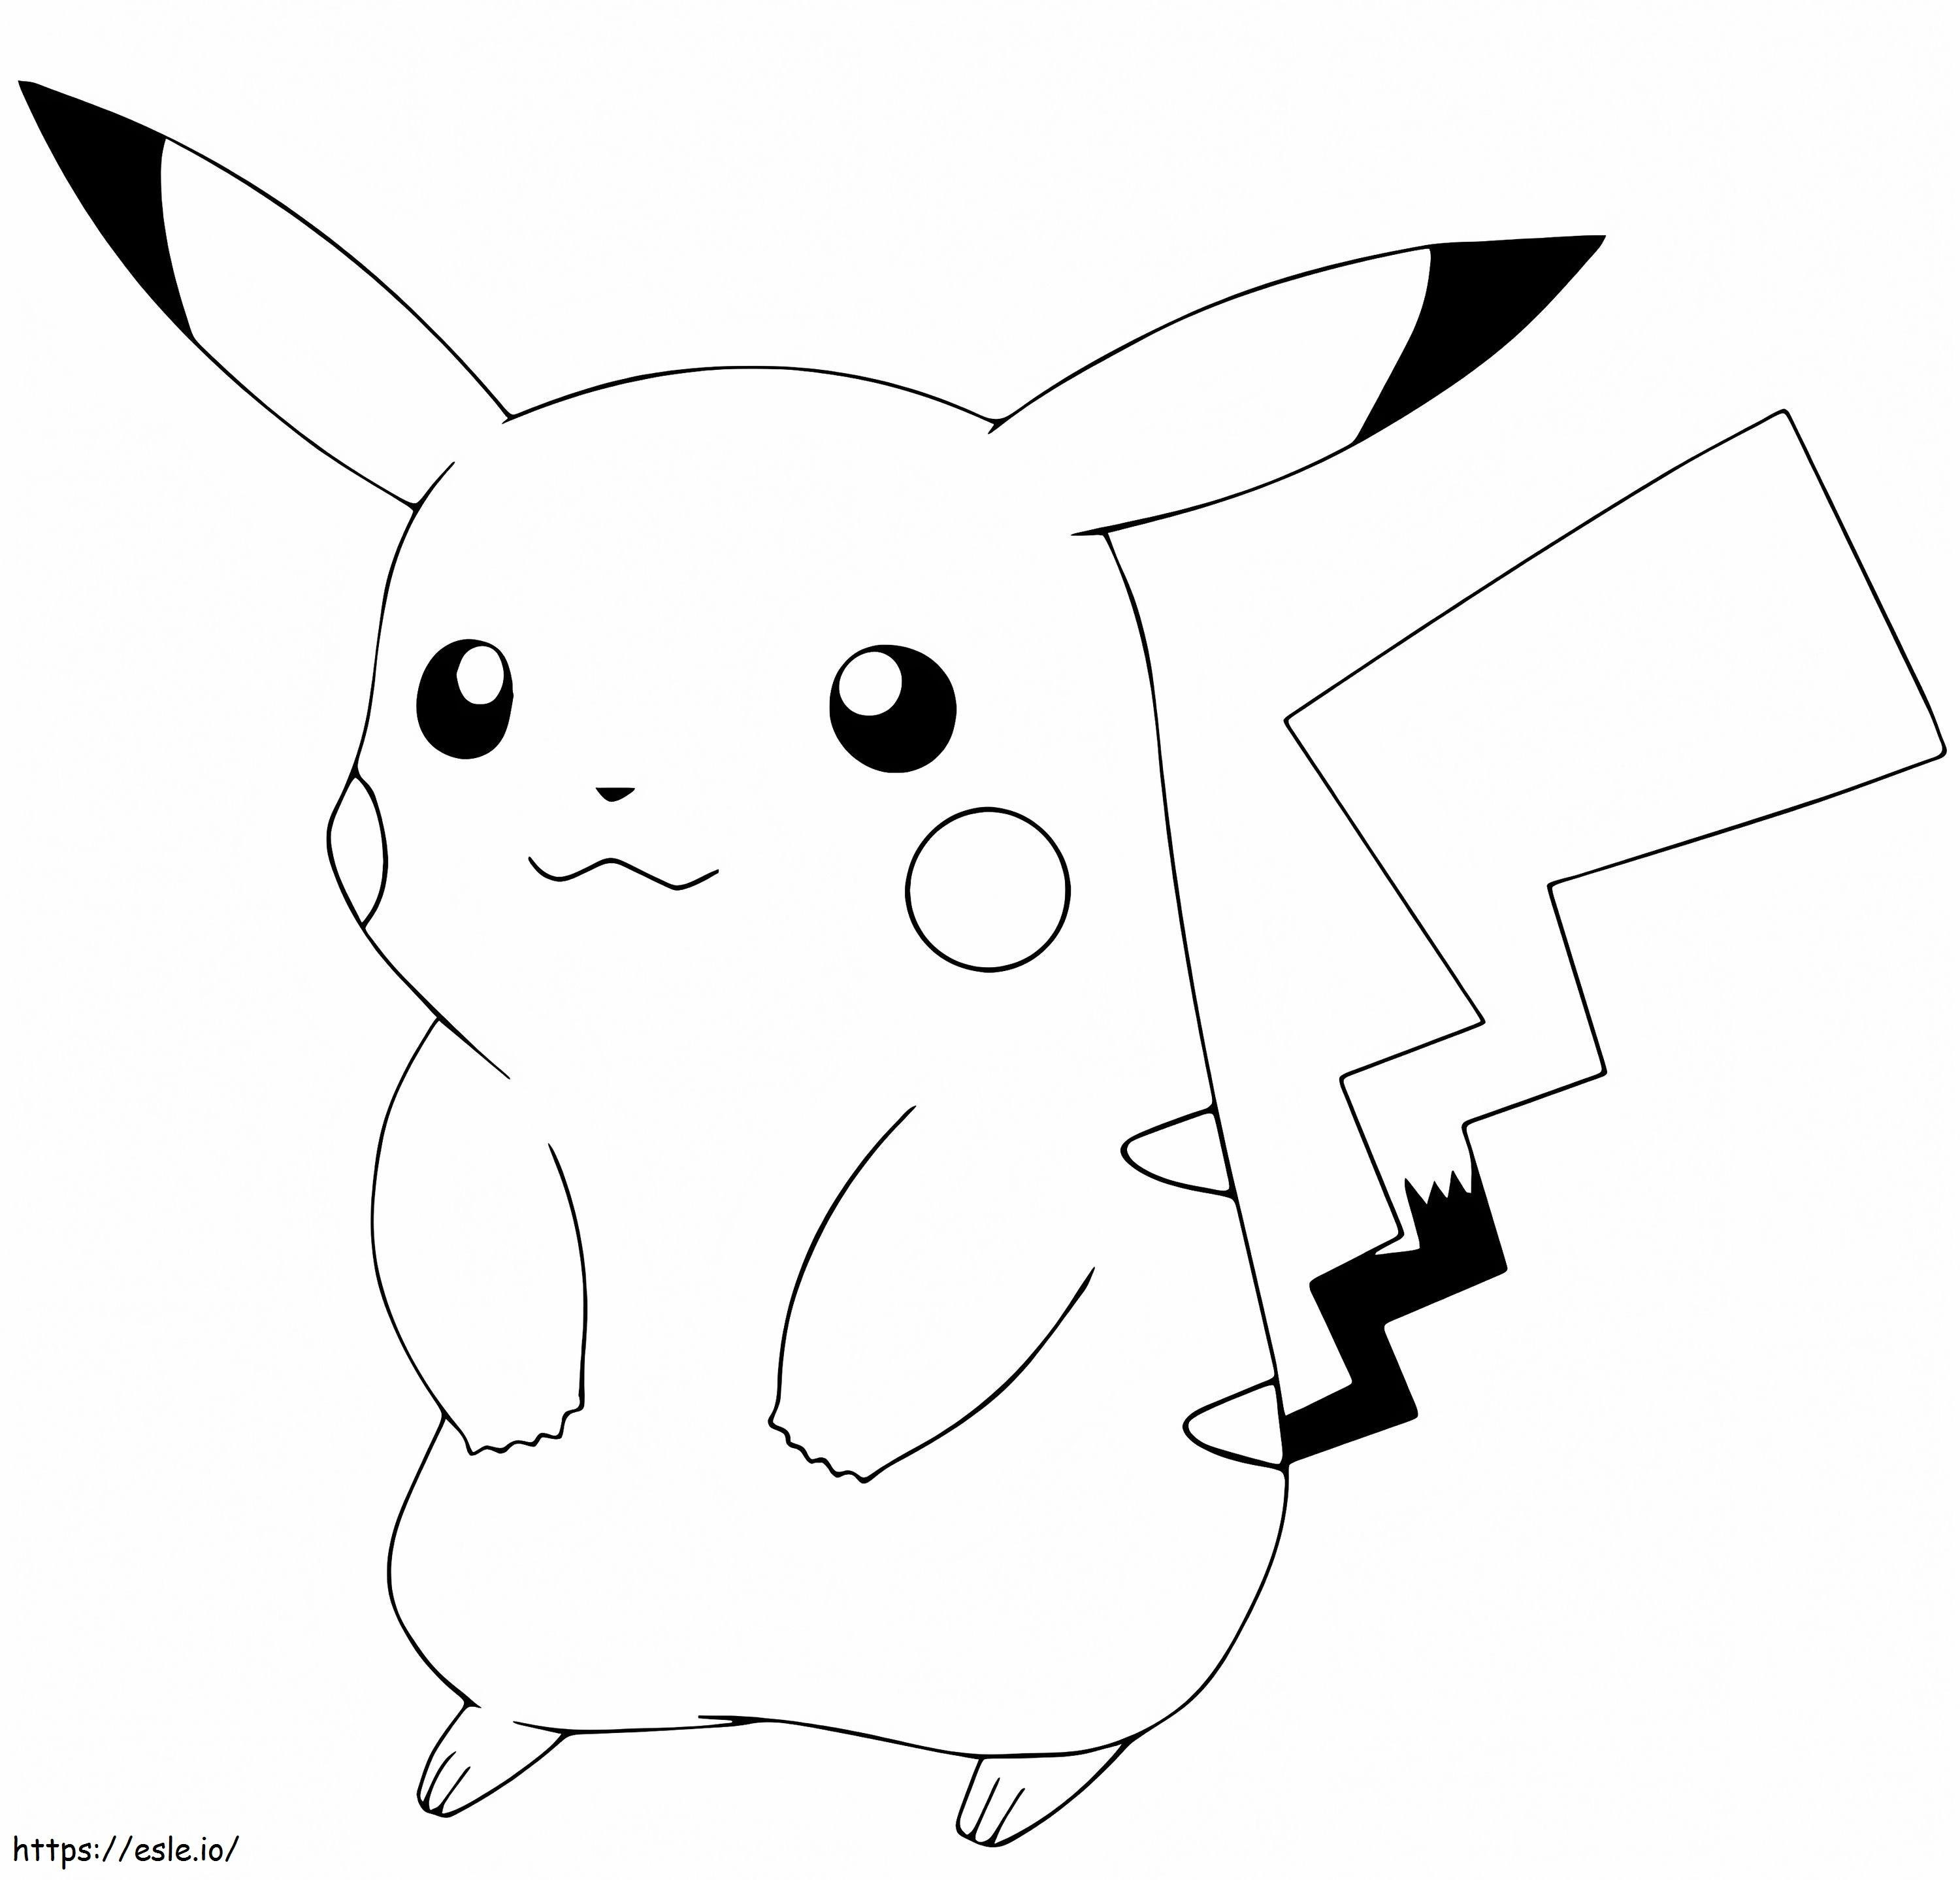 Pokémon Go Pikachu ausmalbilder